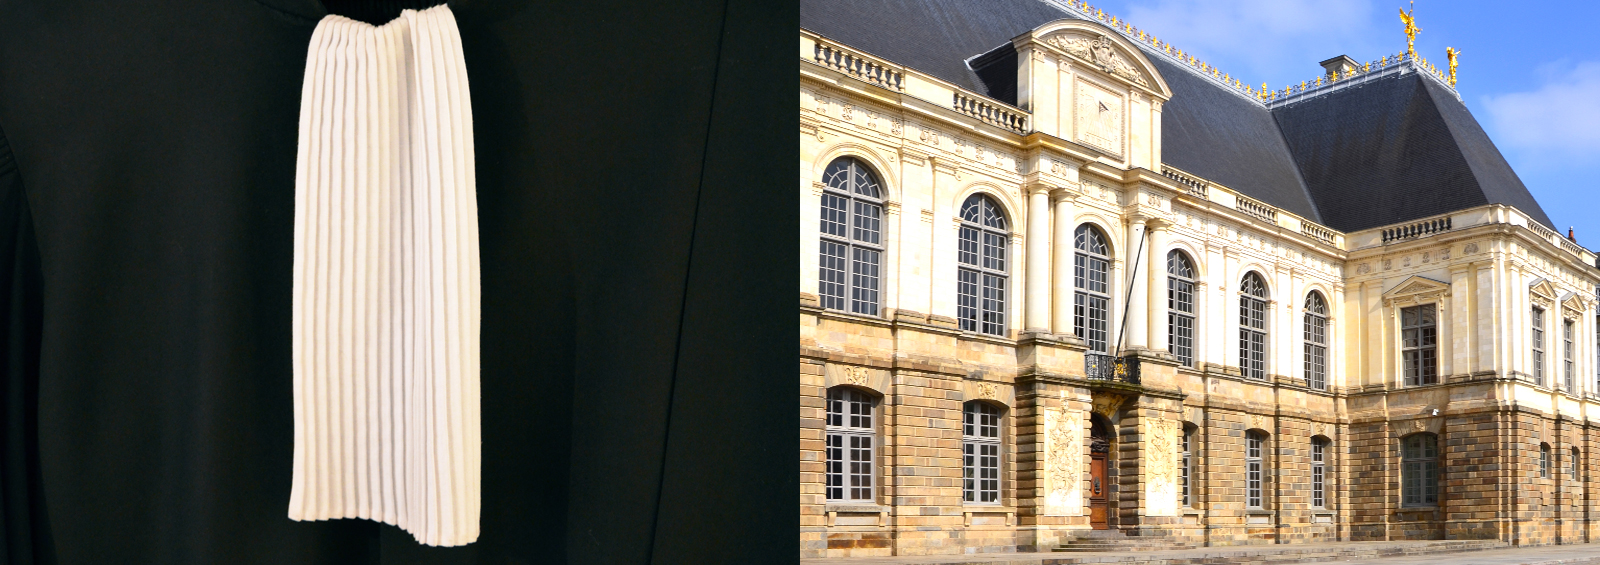 Avocats Bertrand Maillard / Cabinet d'avocats à Rennes / Cour d'Appel de Rennes 